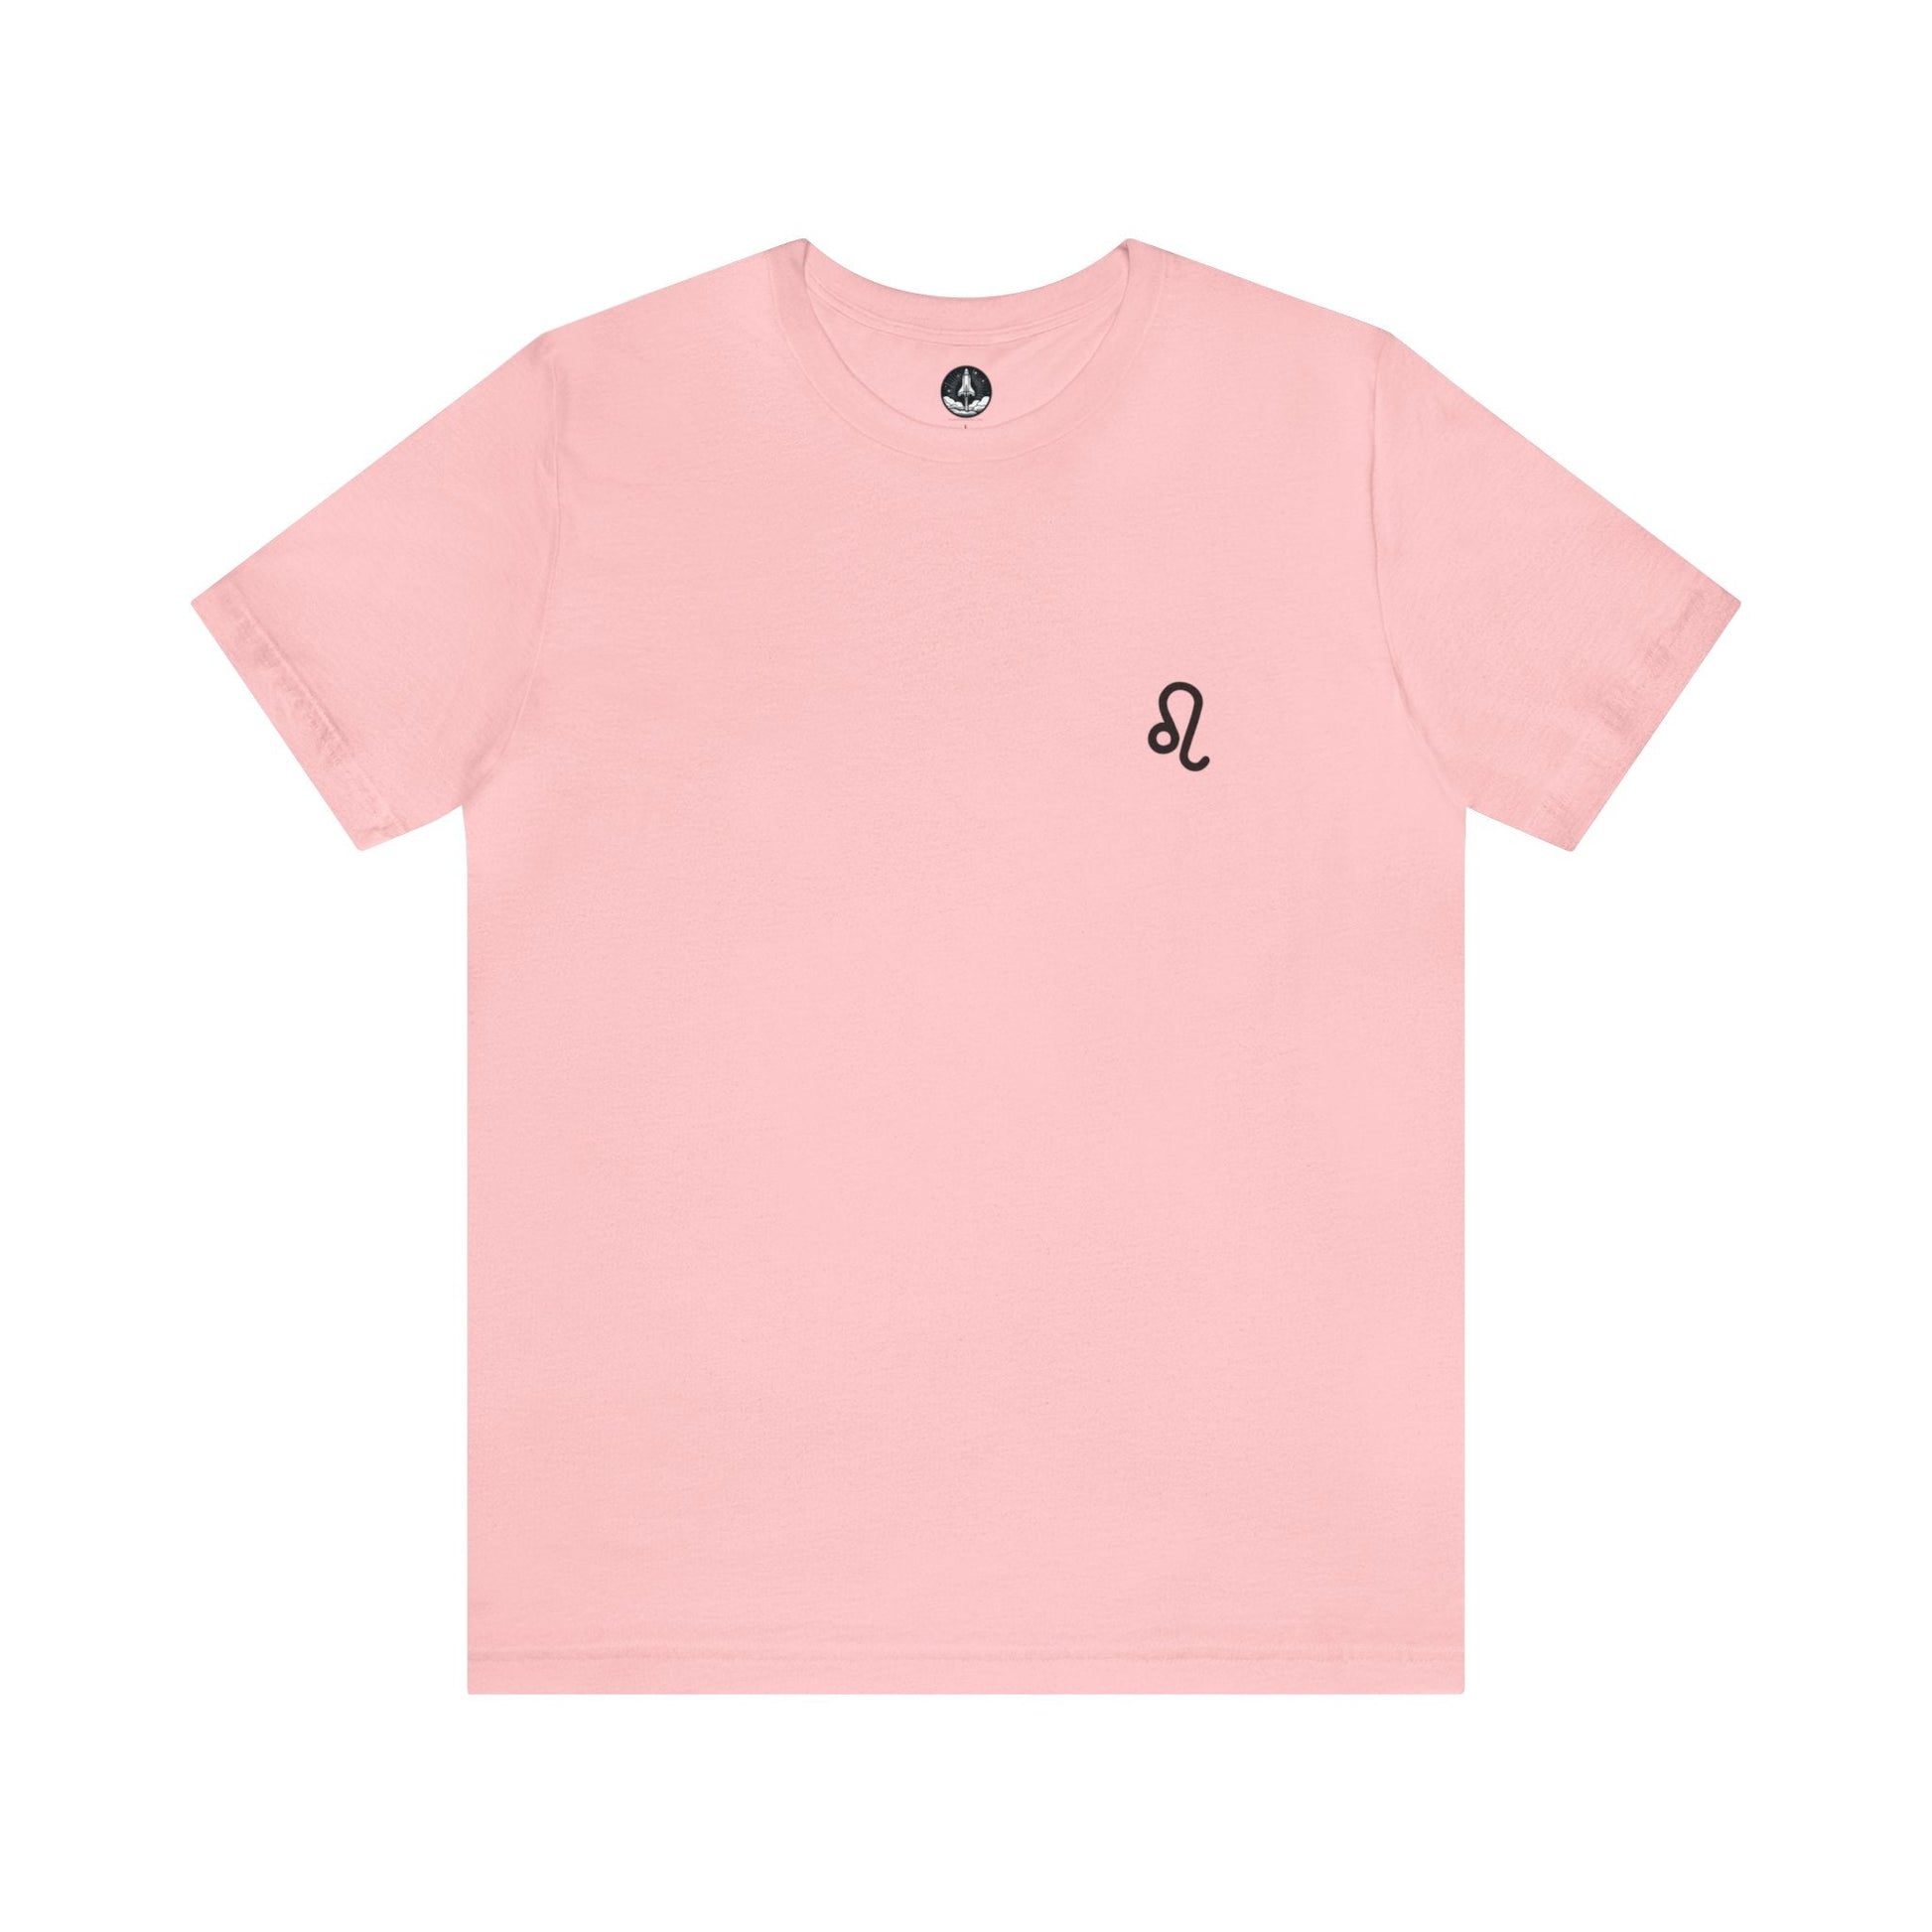 T-Shirt Pink / S Leo Minimalist Majesty T-Shirt: Bold Elegance for the Zodiac King